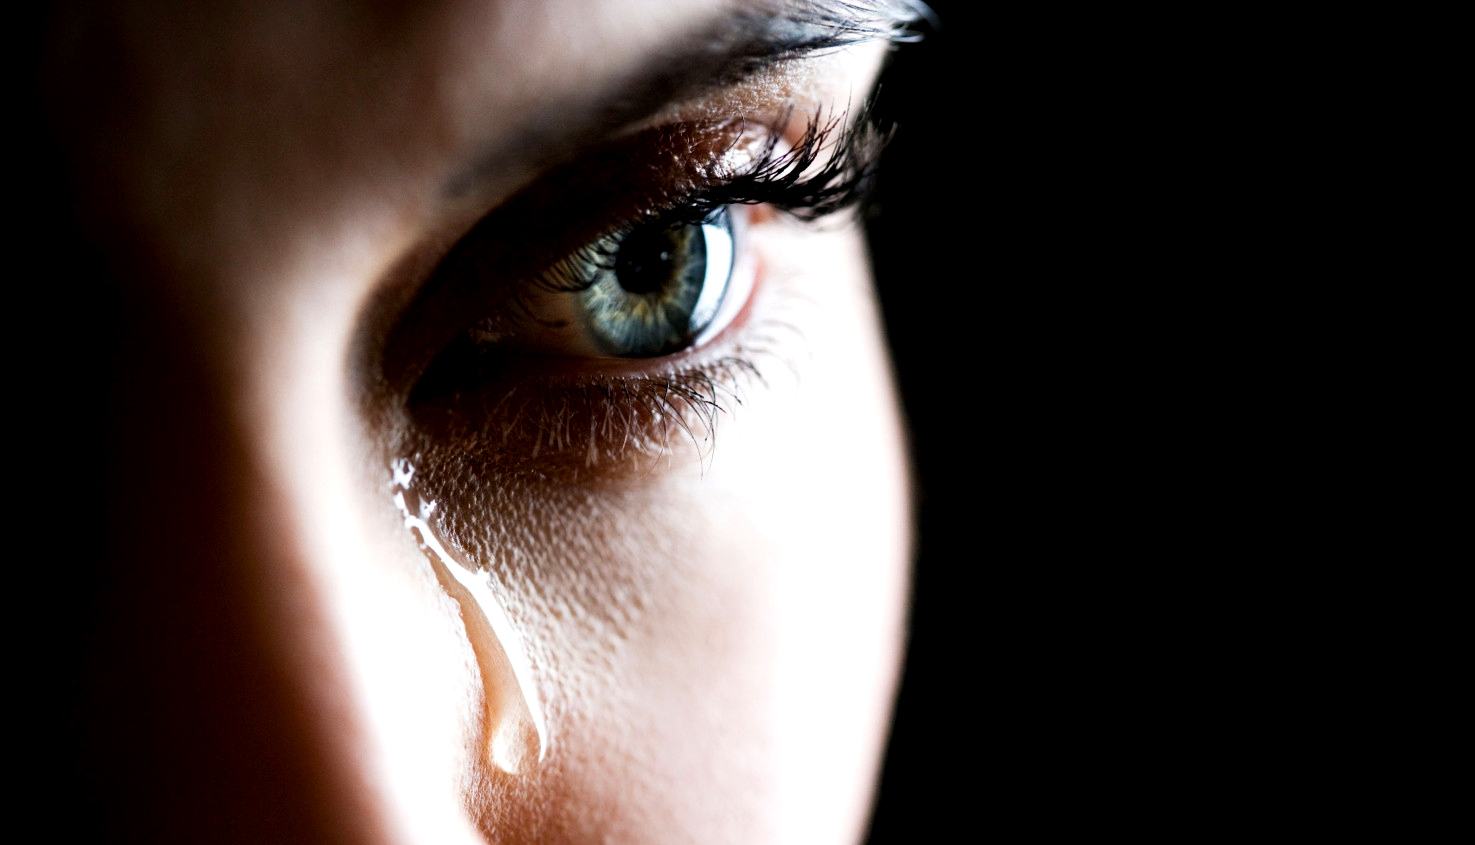 Weeping woman